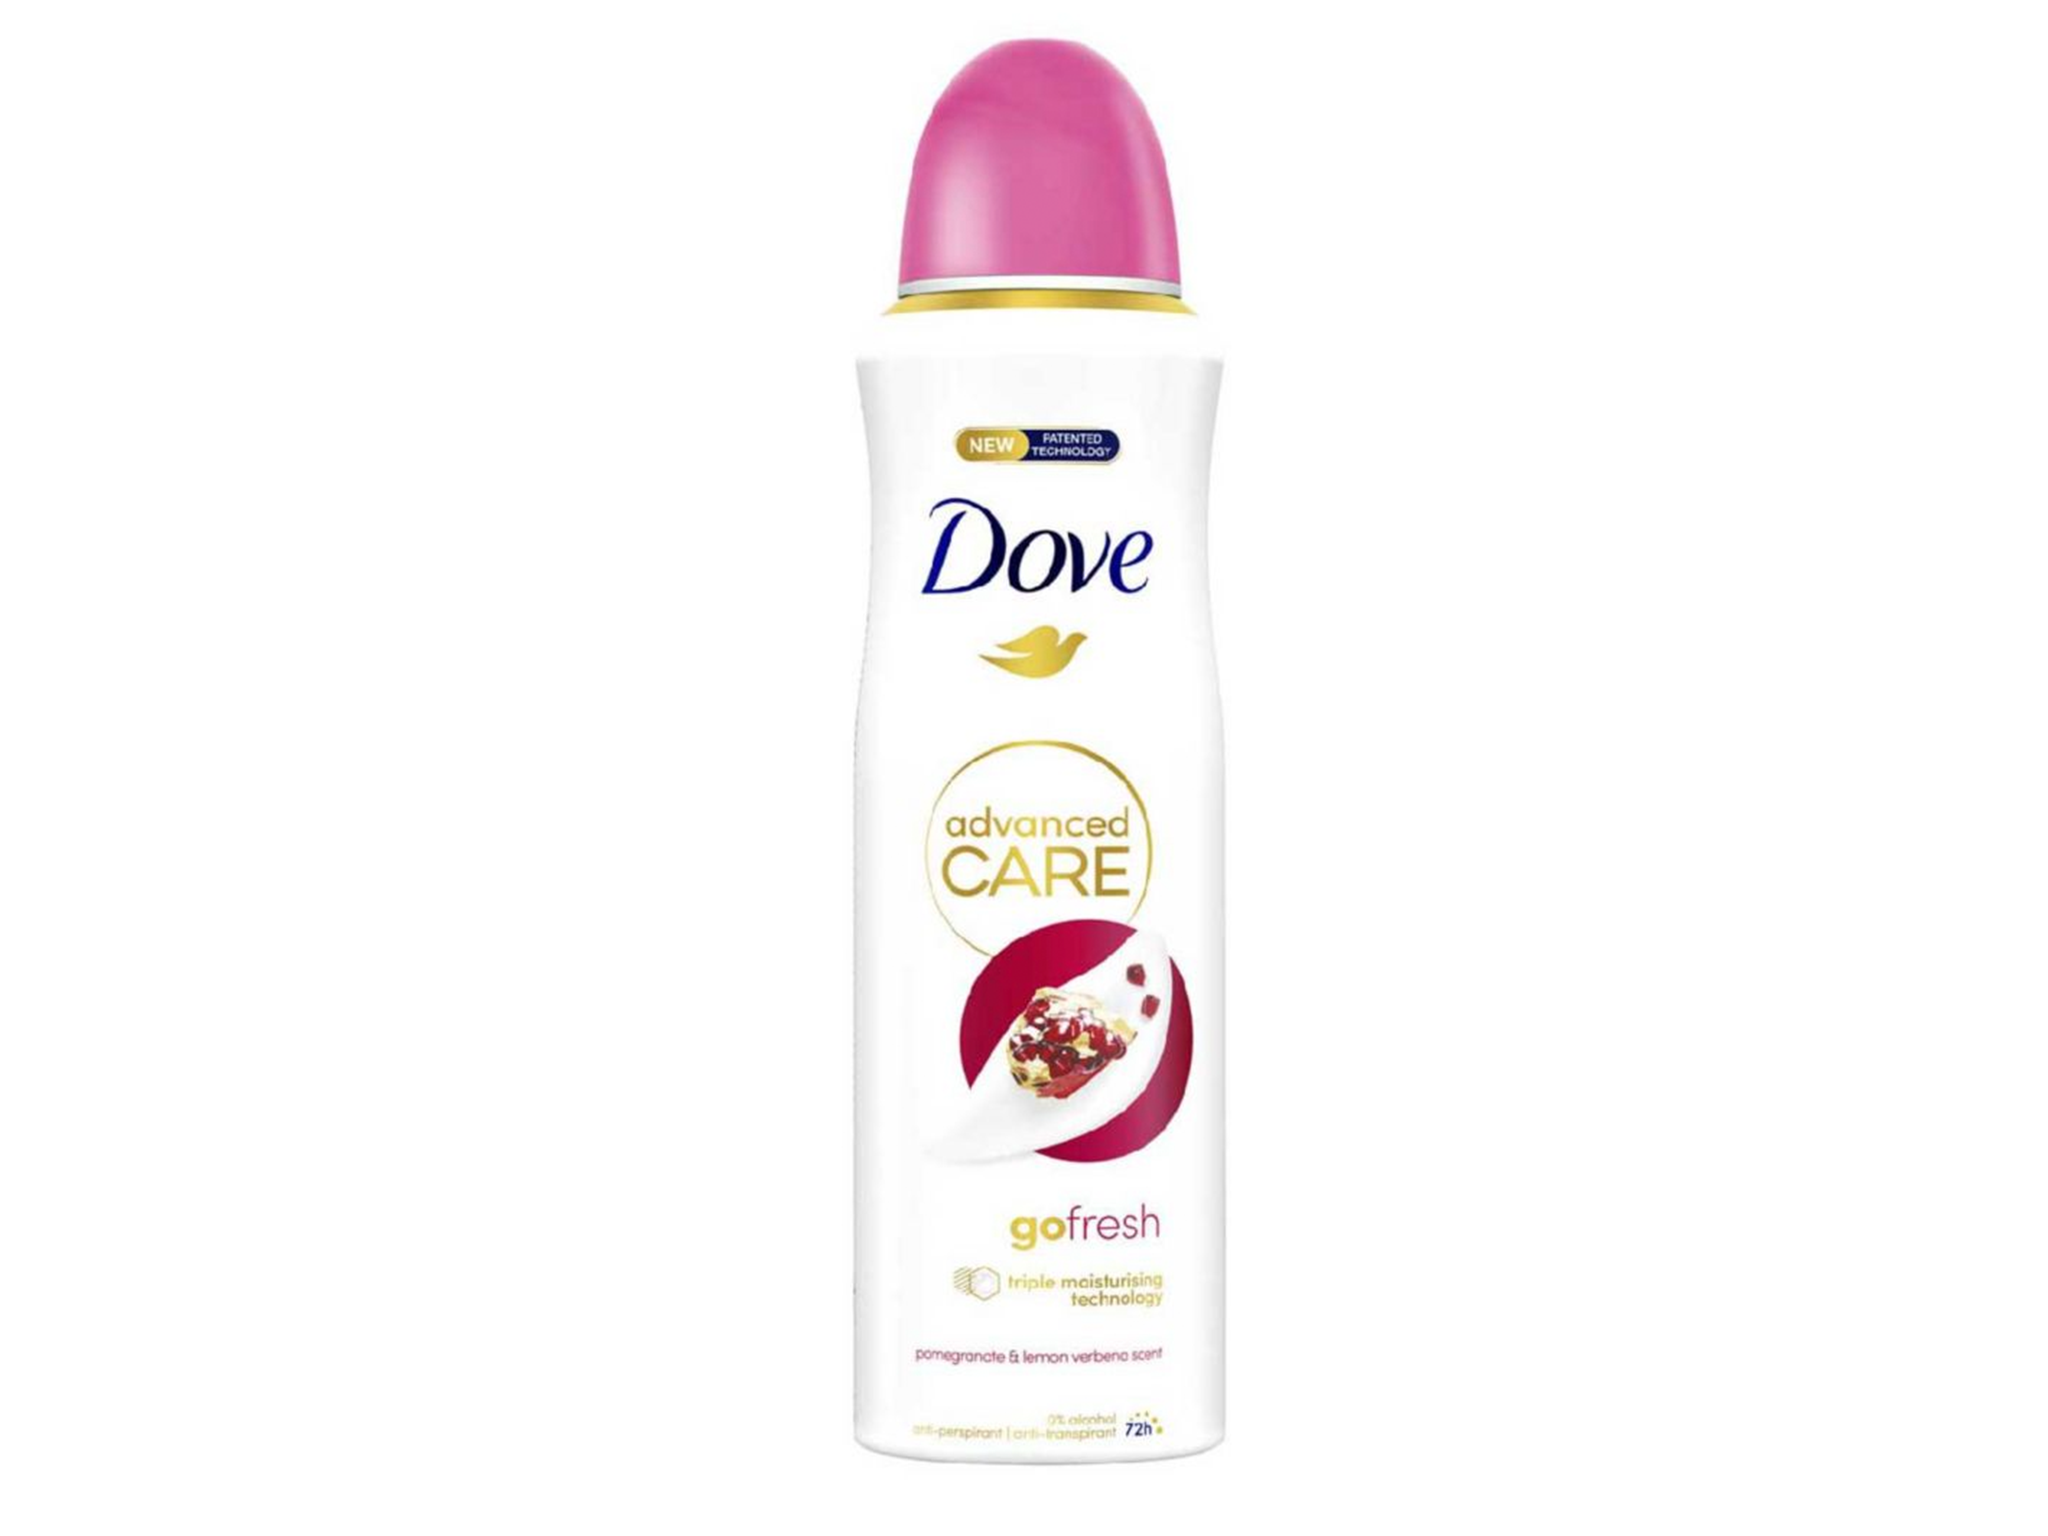 Bargain beauty buys Dove advanced care go fresh pomegranate & lemon verbena scent antiperspirant deodorant spray